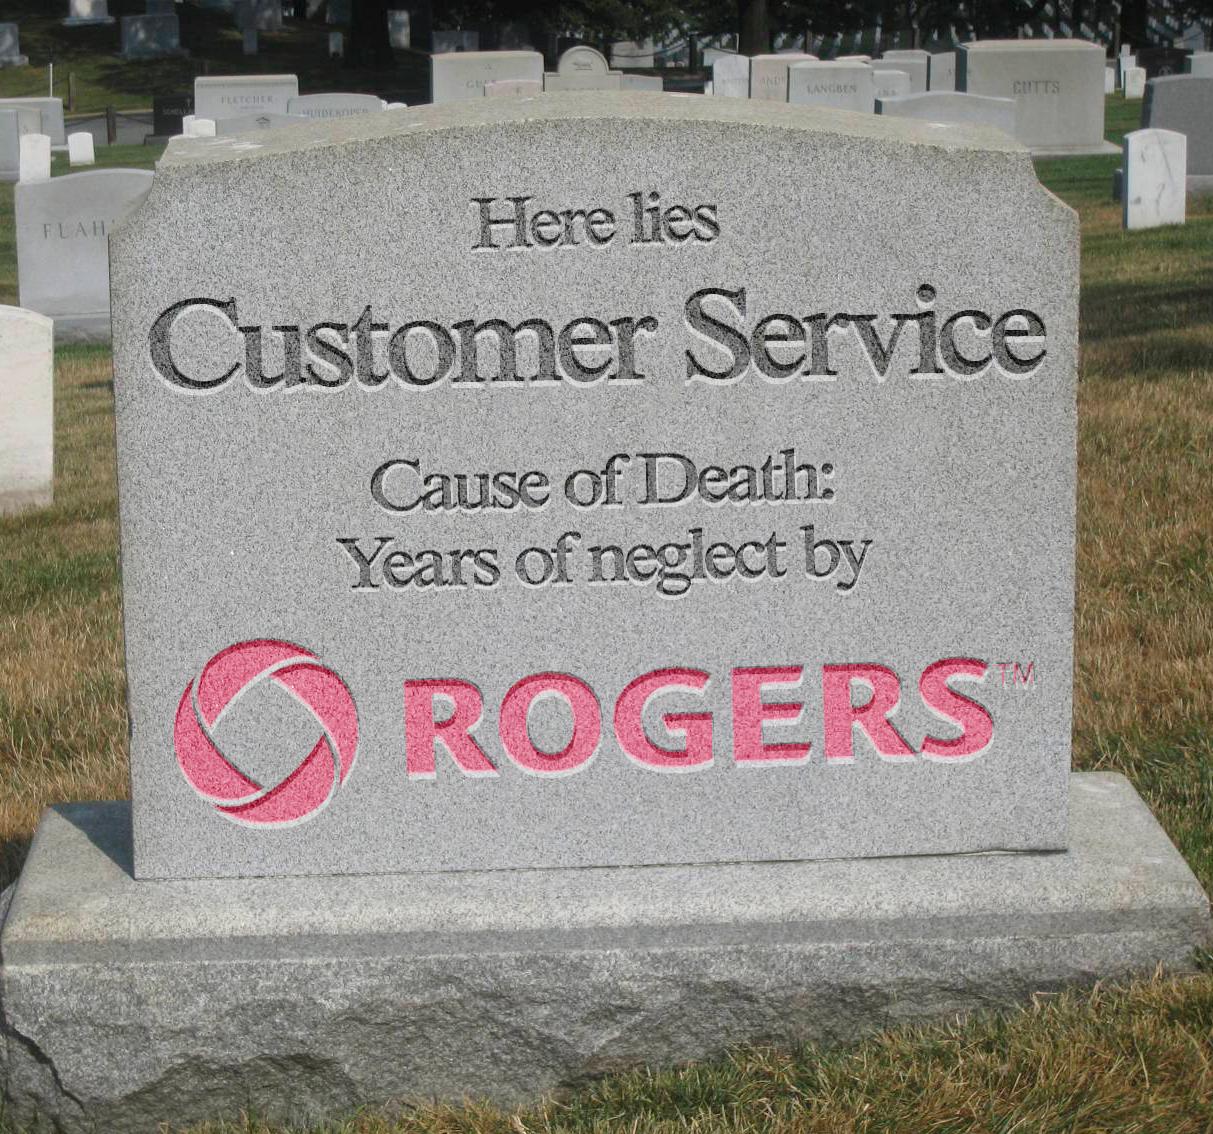 Rogers Customer Service meme